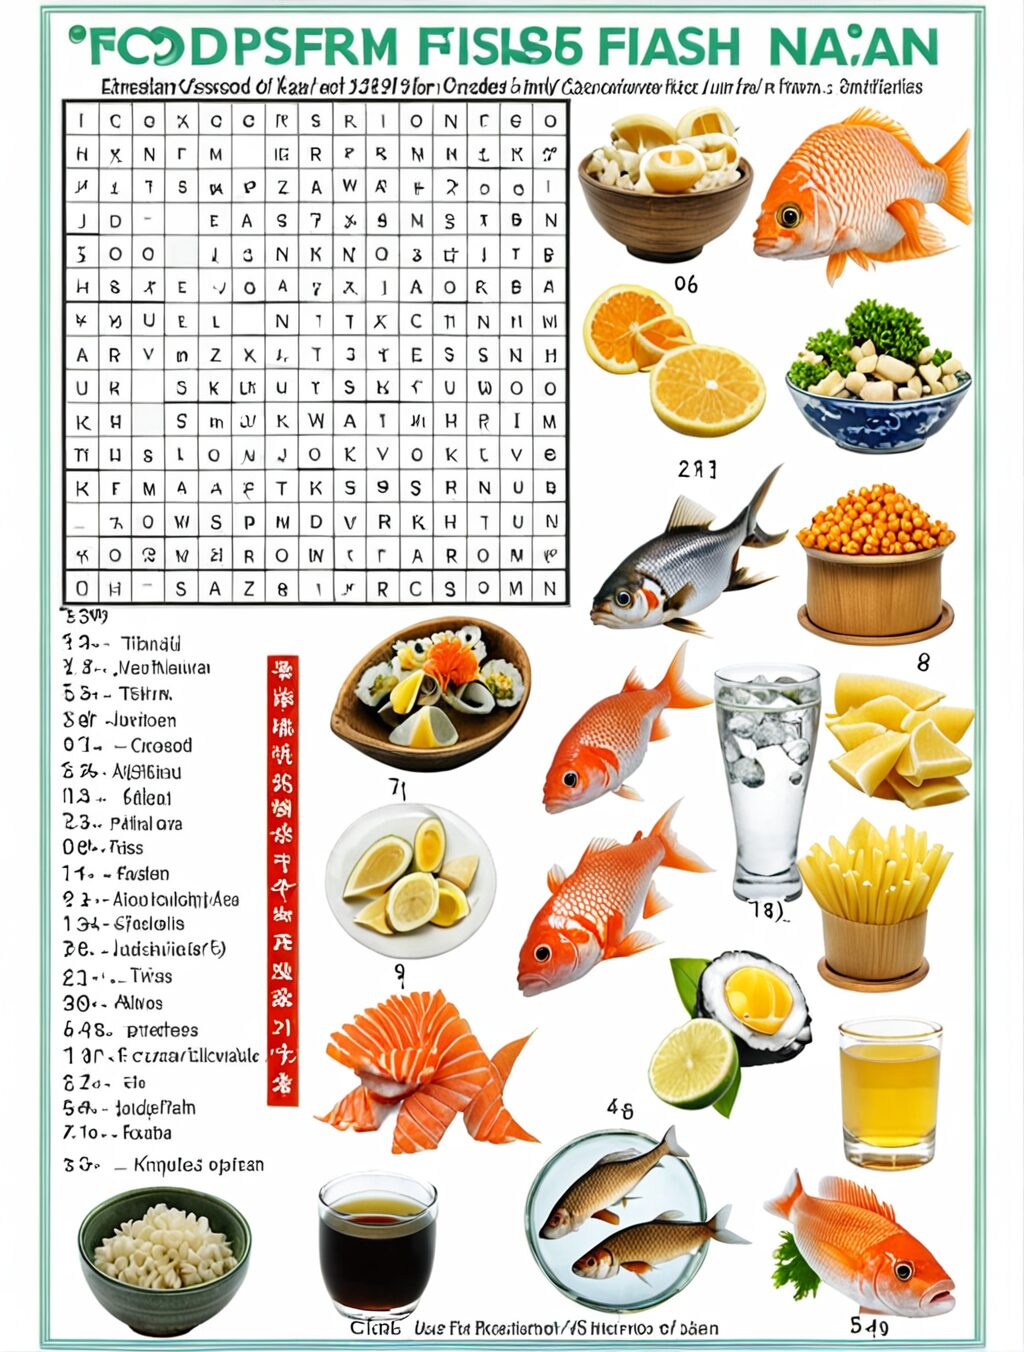 food fish of japan crossword clue